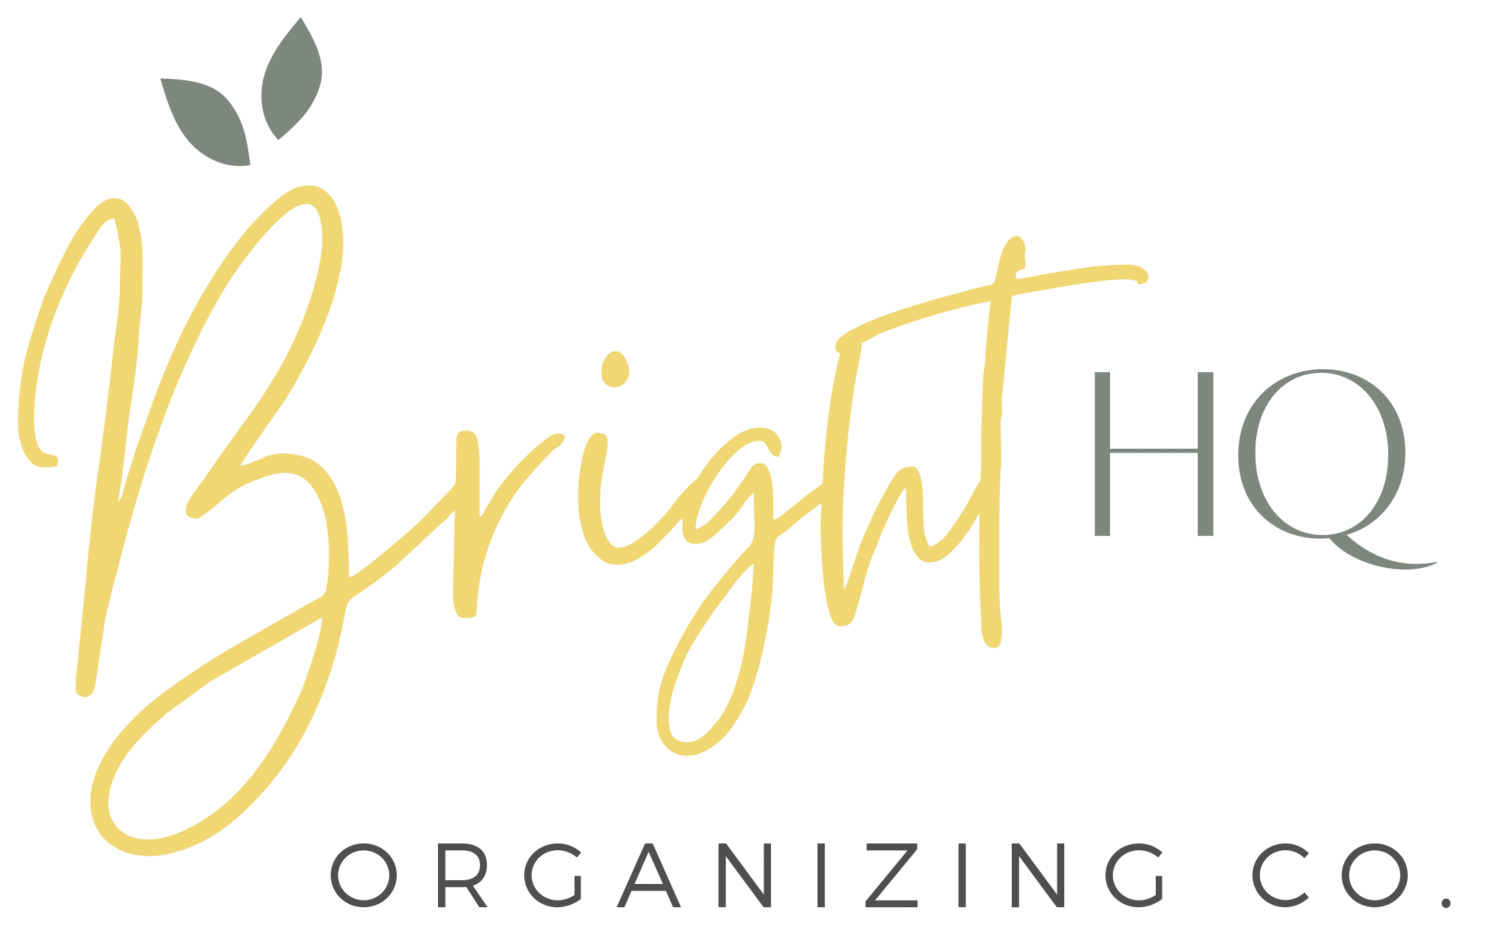 Bright HQ Organizing Co.